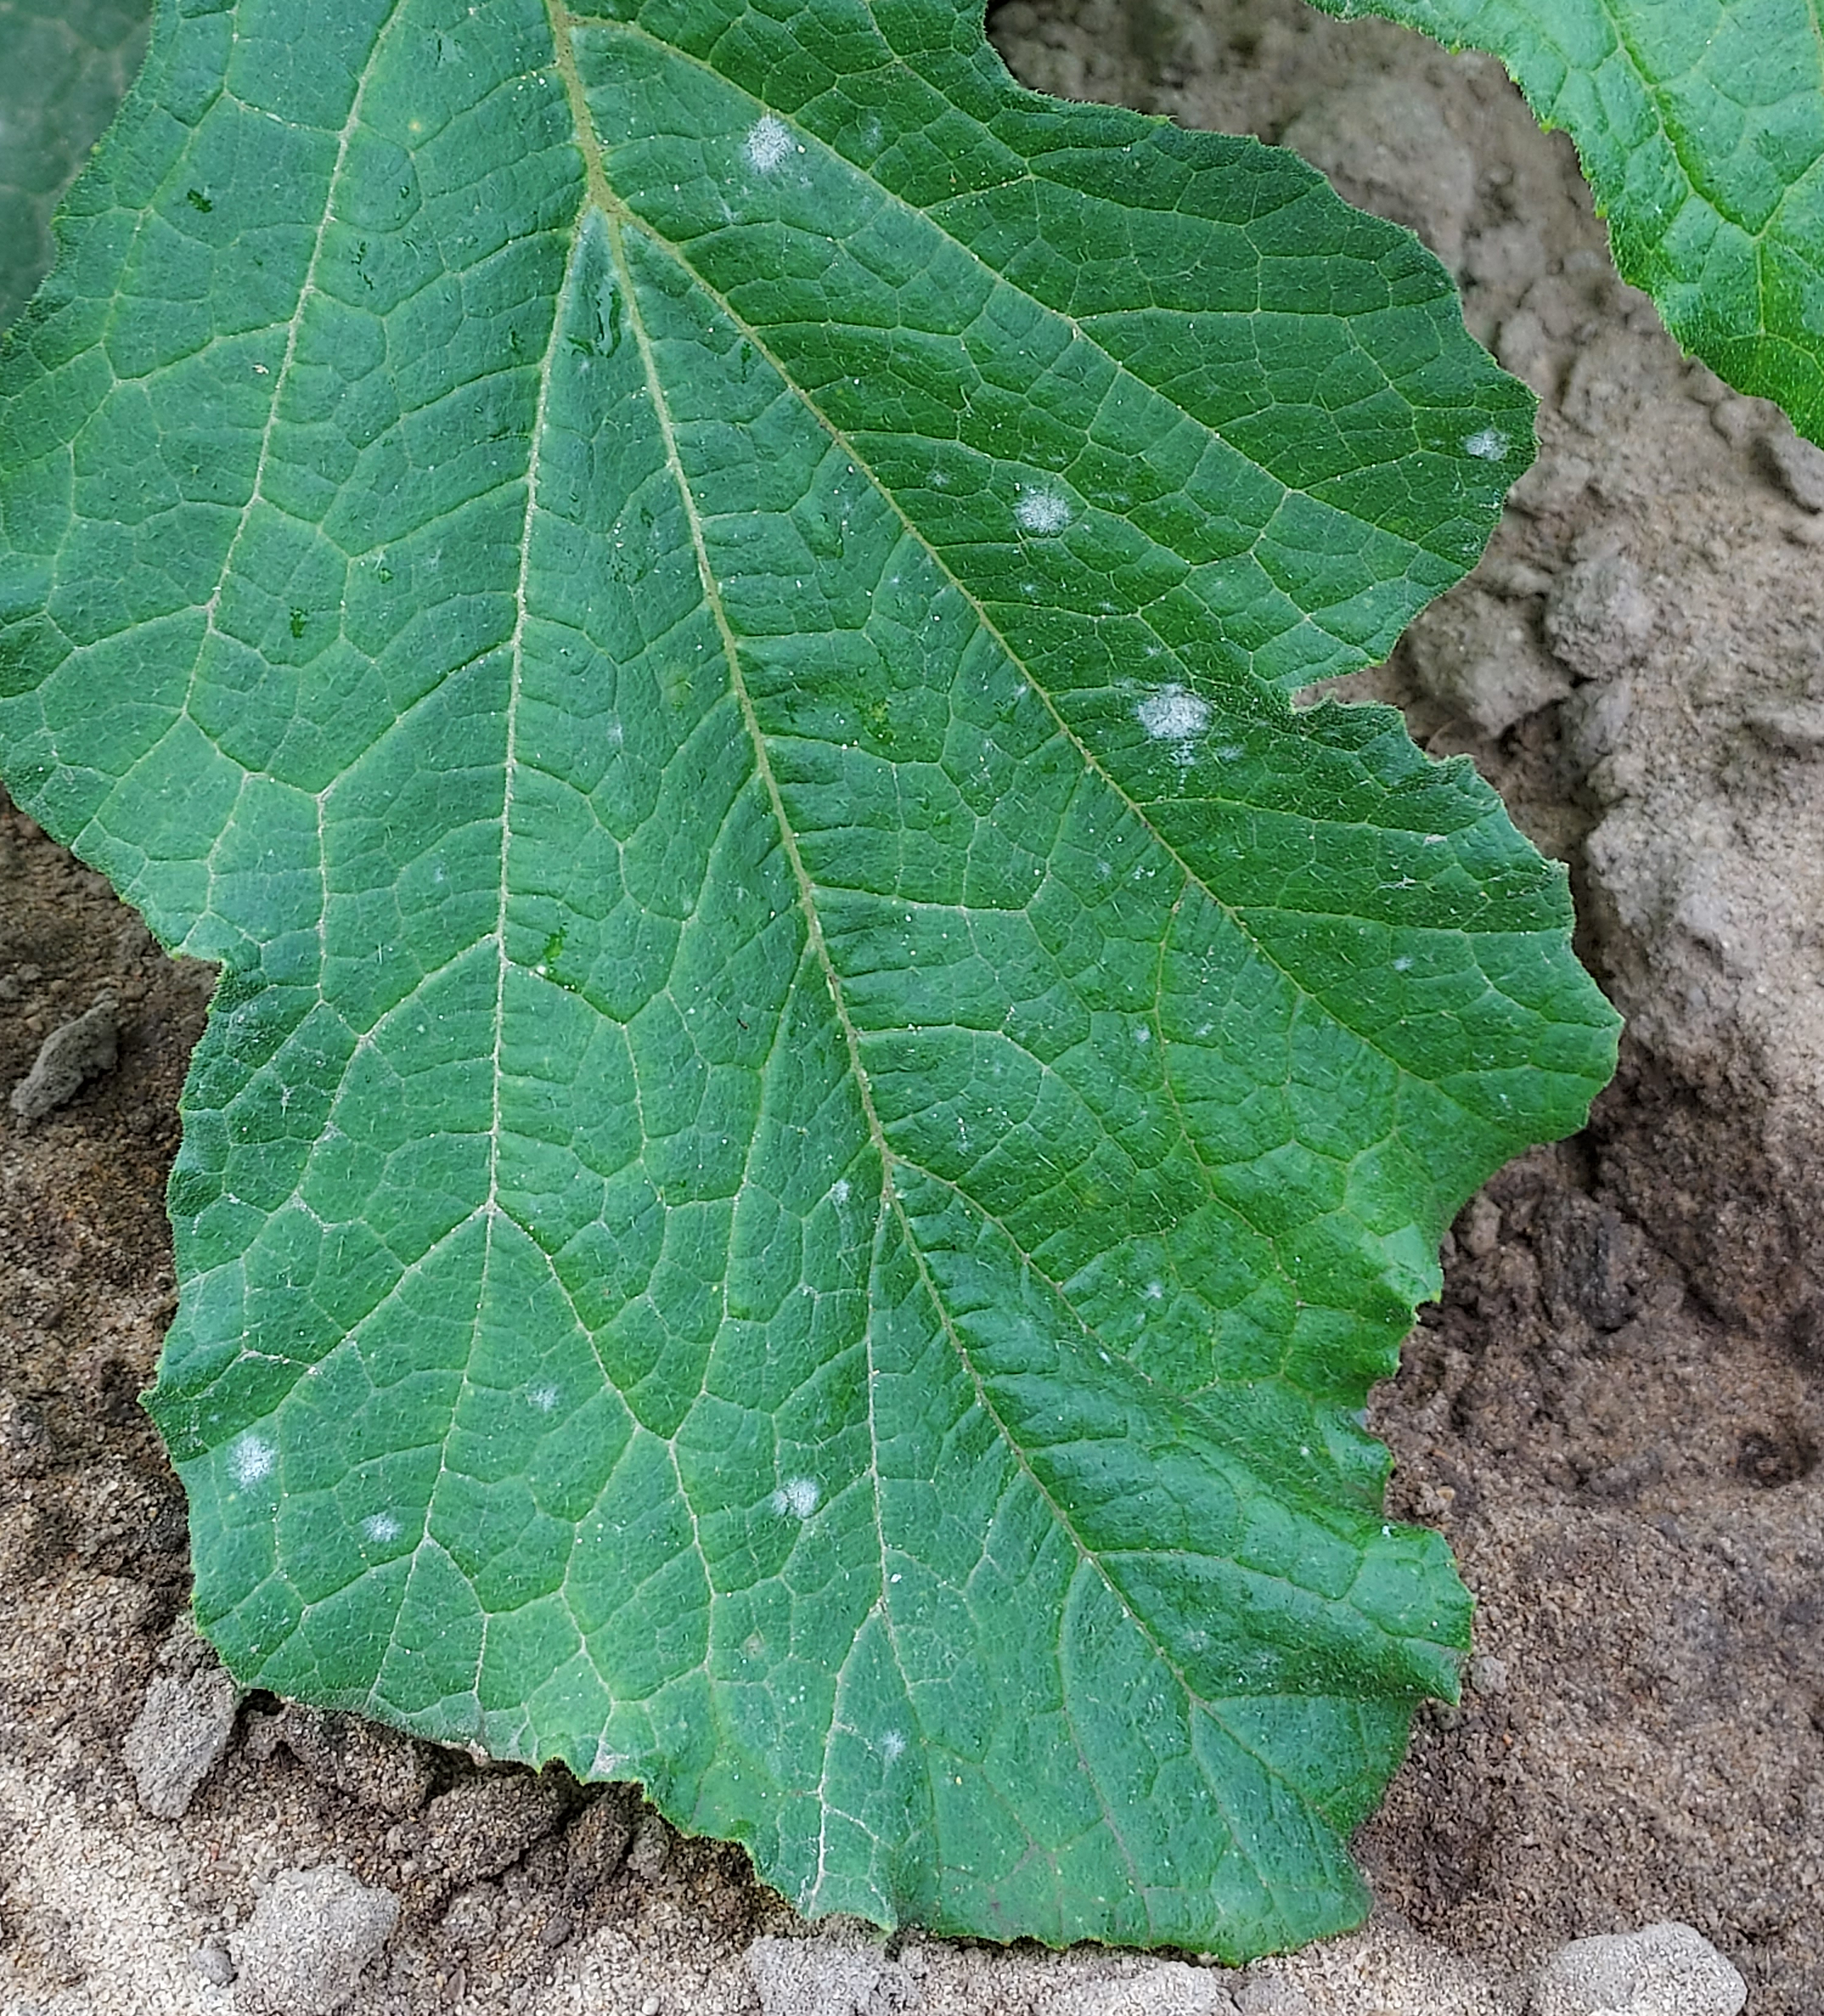 Powdery mildew spots on leaf